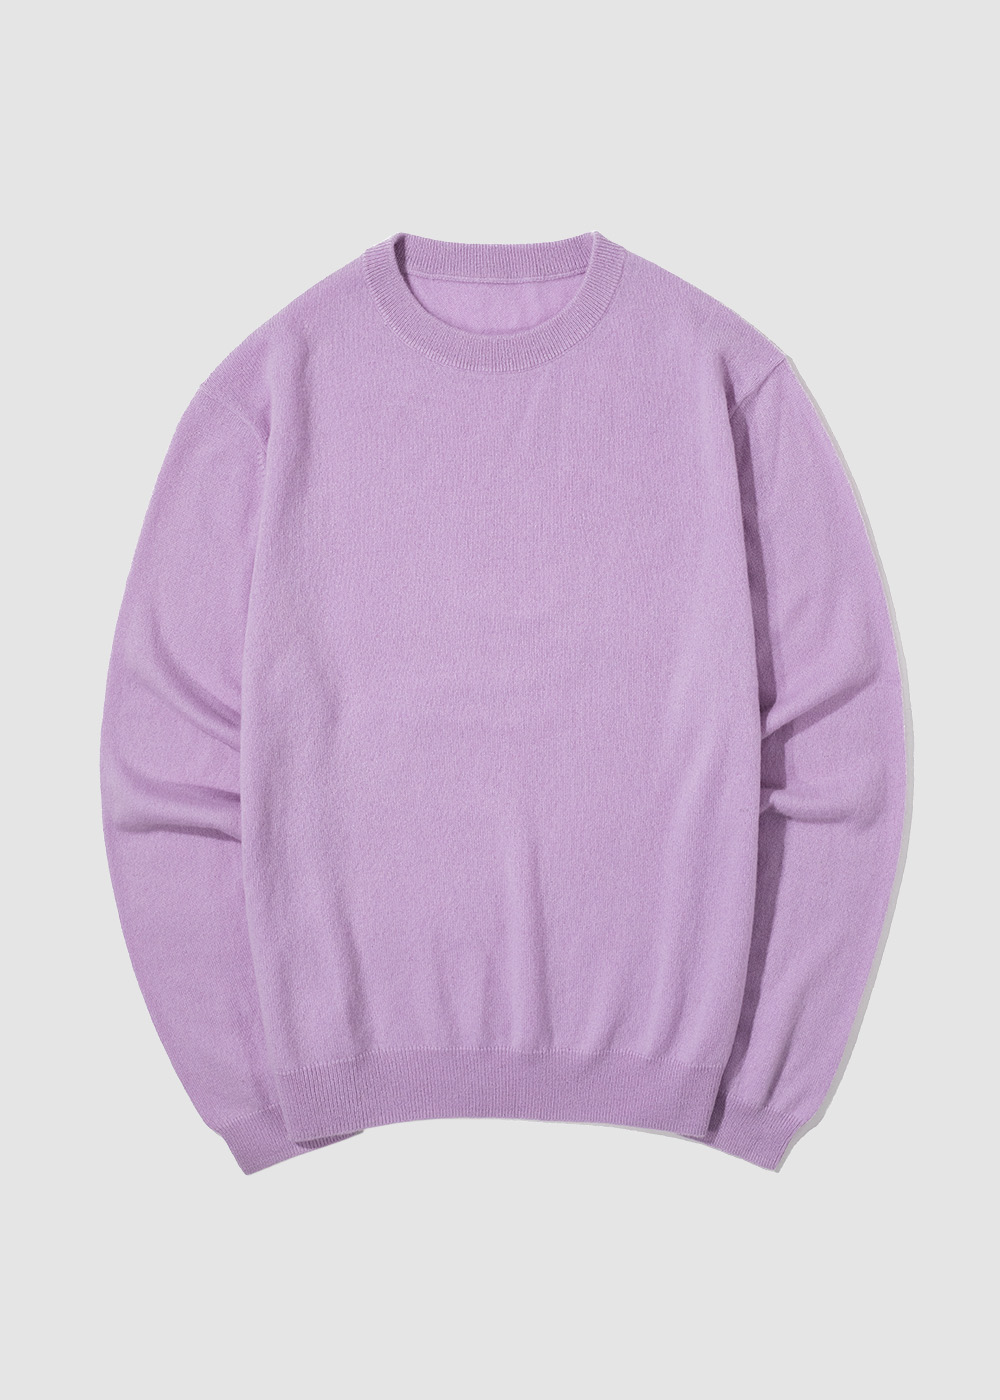 Cashmere 100% Crewneck Knit _ light purple